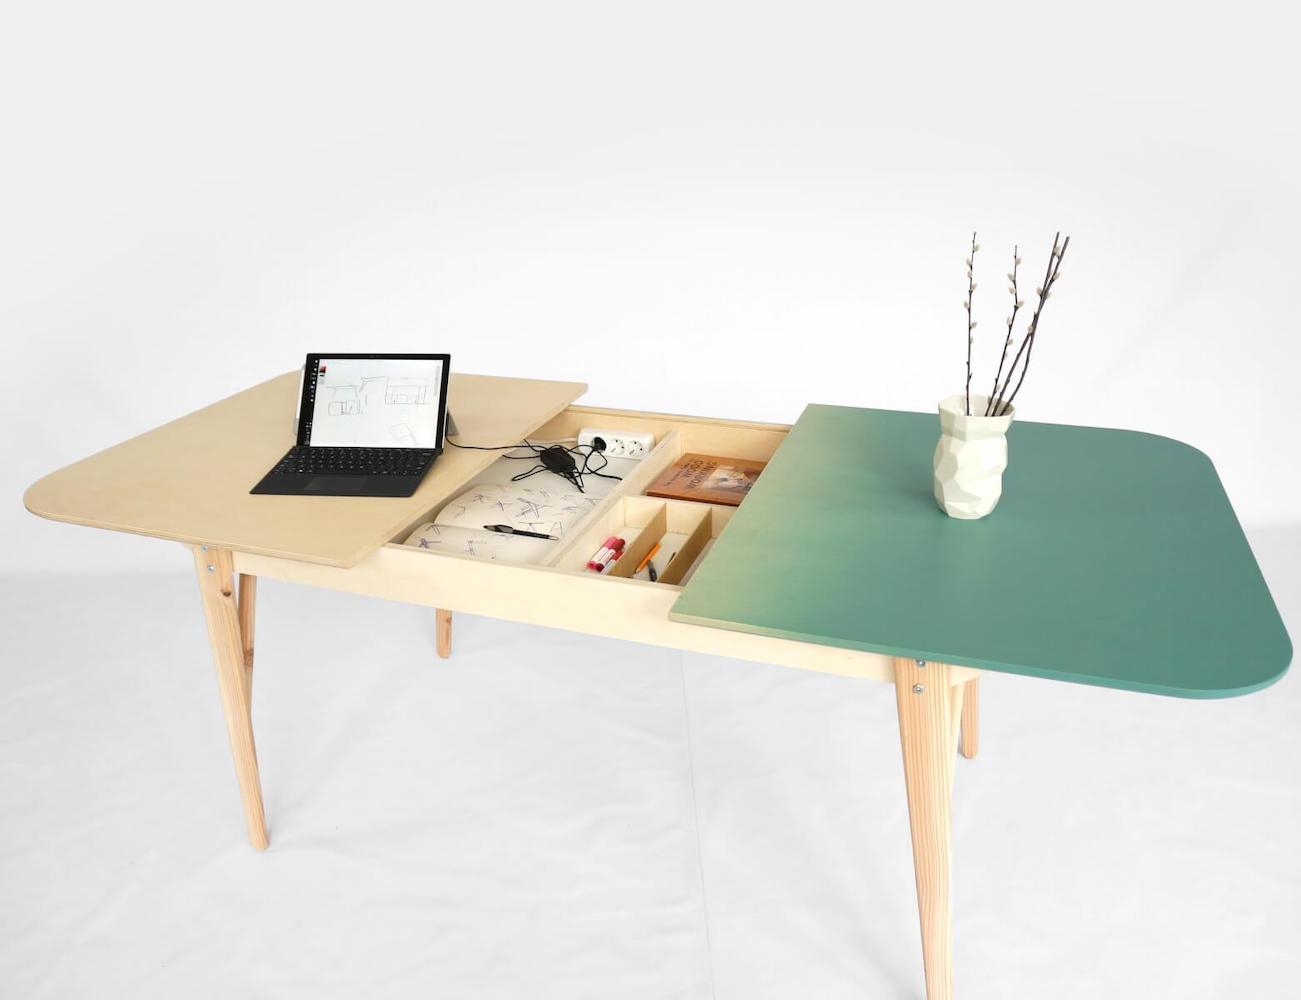 产品设计,家具,桌子,tableworks